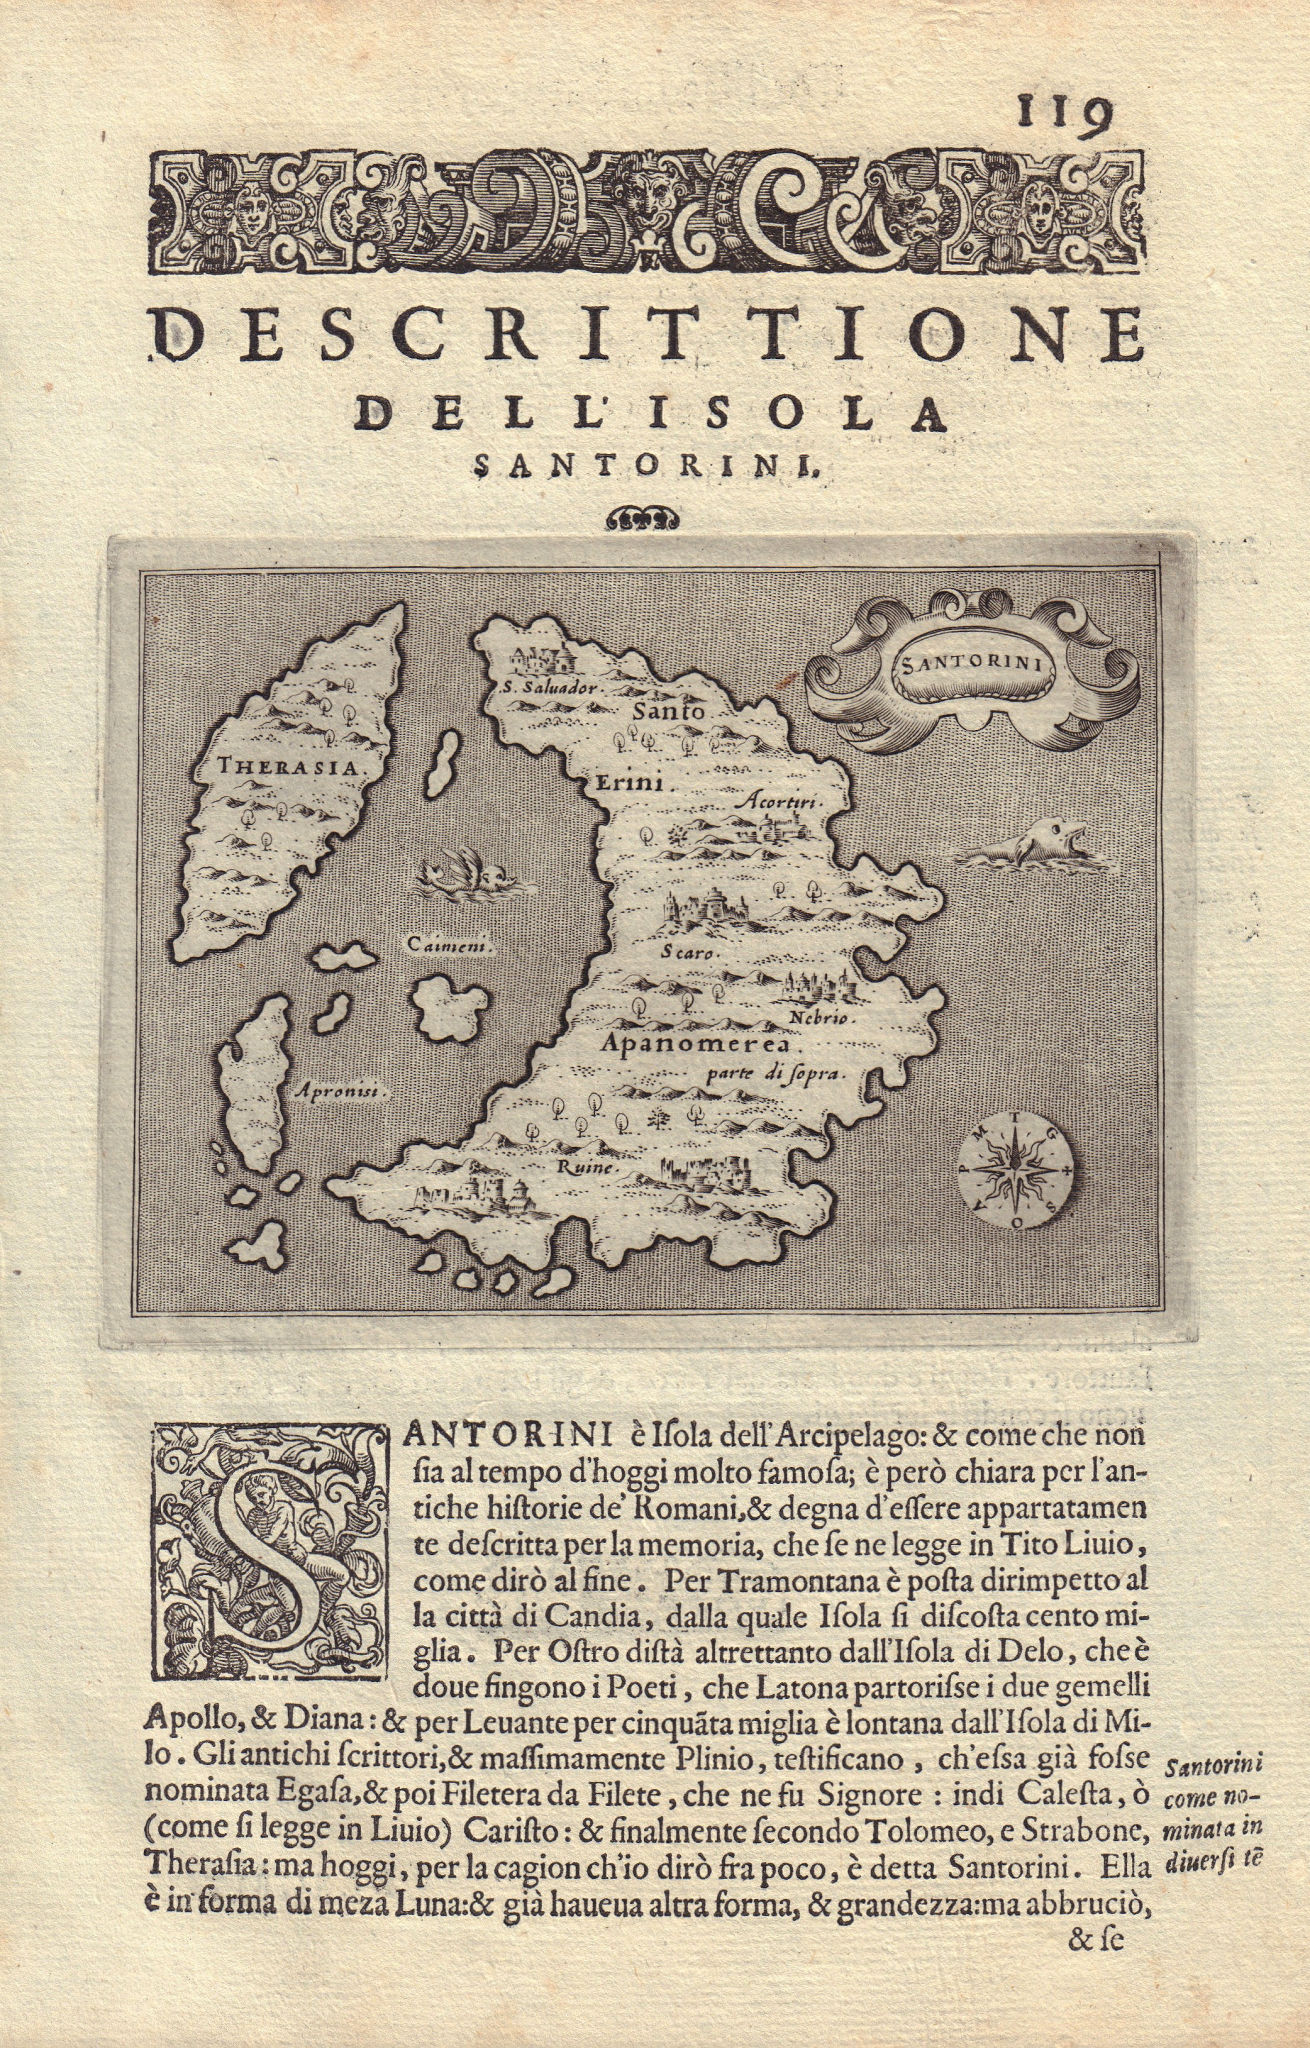 Associate Product Descrittione dell' Isola Santorini. PORCACCHI. Cyclades Greece 1590 old map